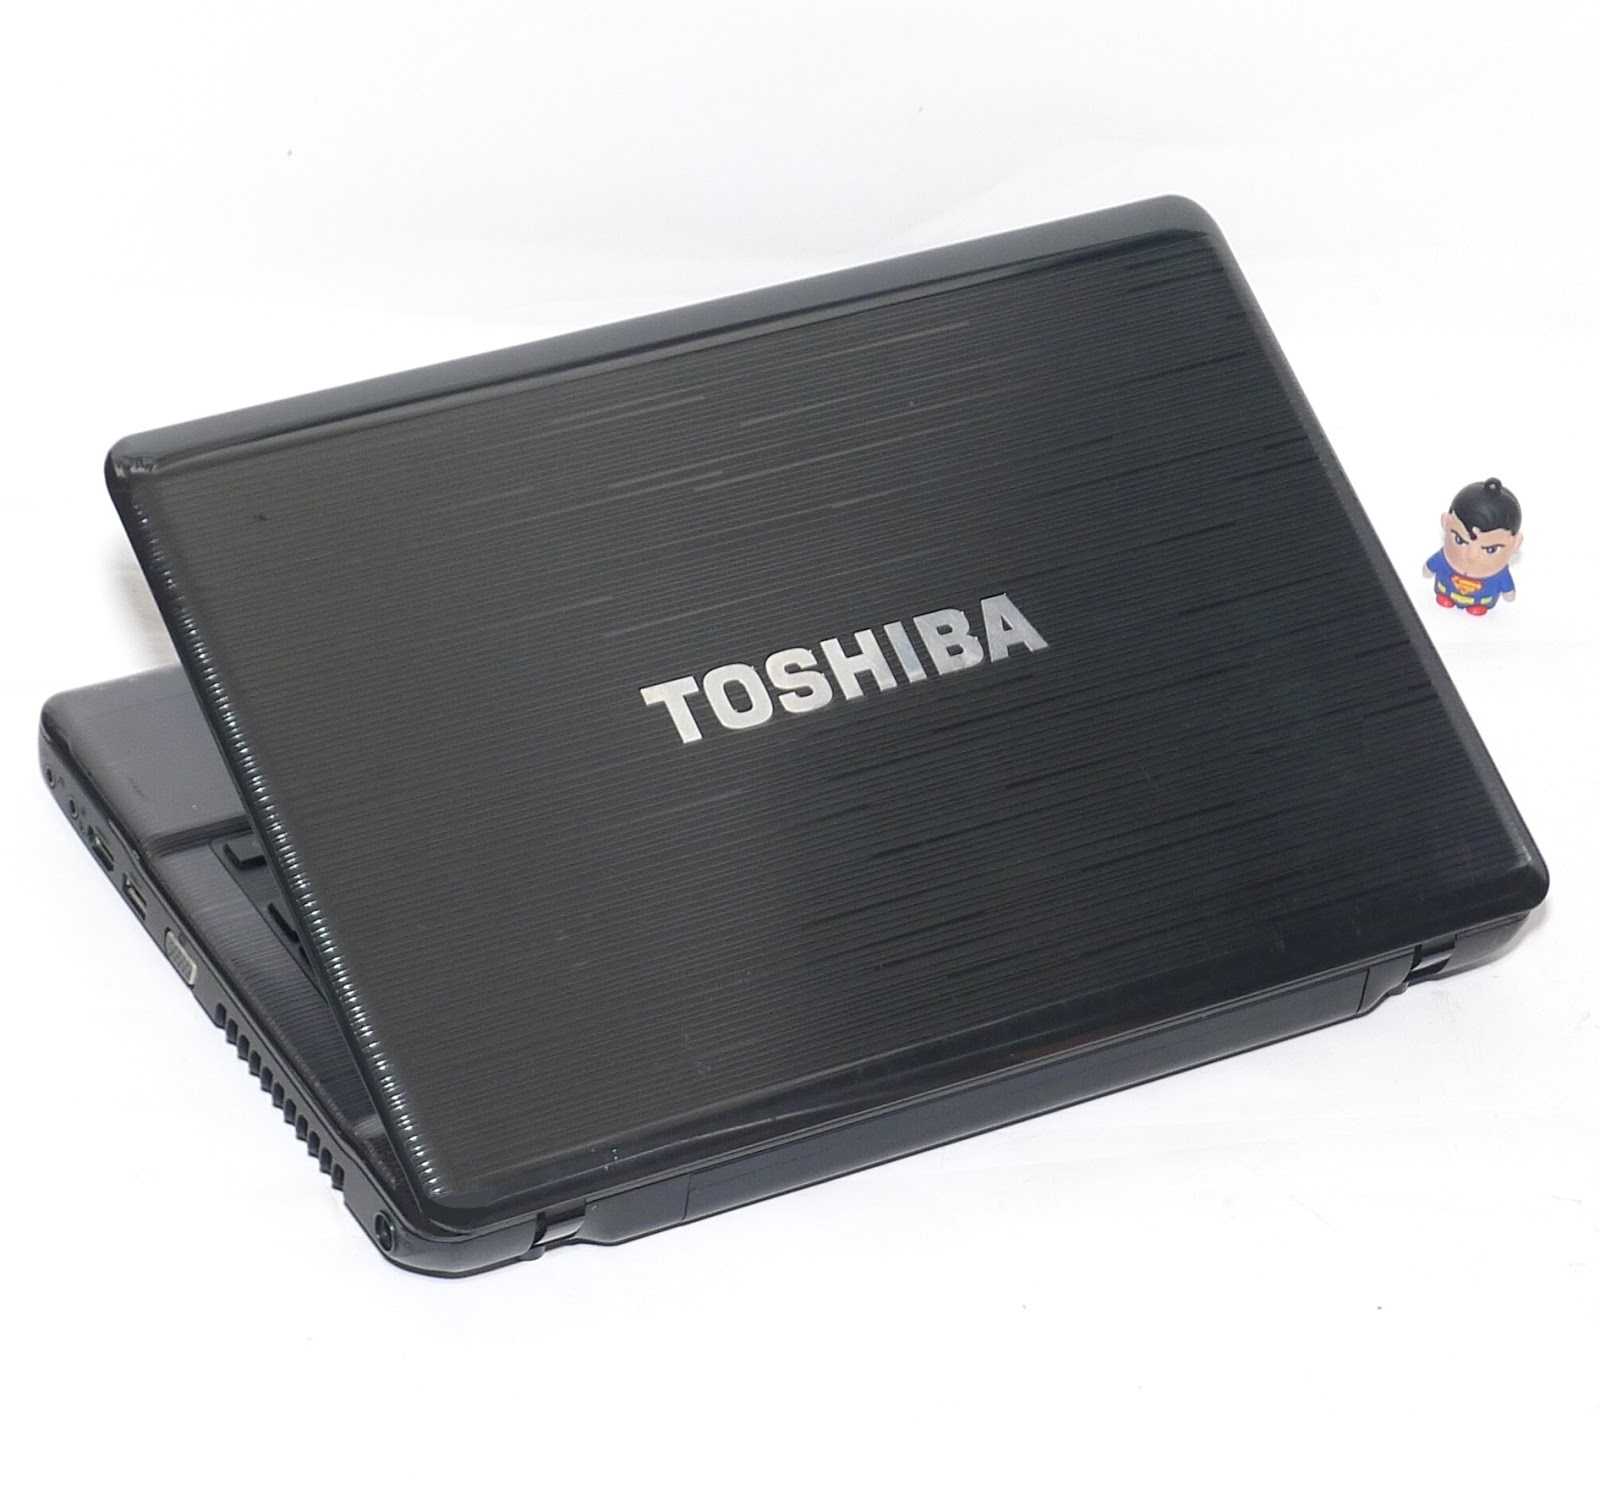 Ноутбук toshiba satellite p50-a-k4m — купить, цена и характеристики, отзывы